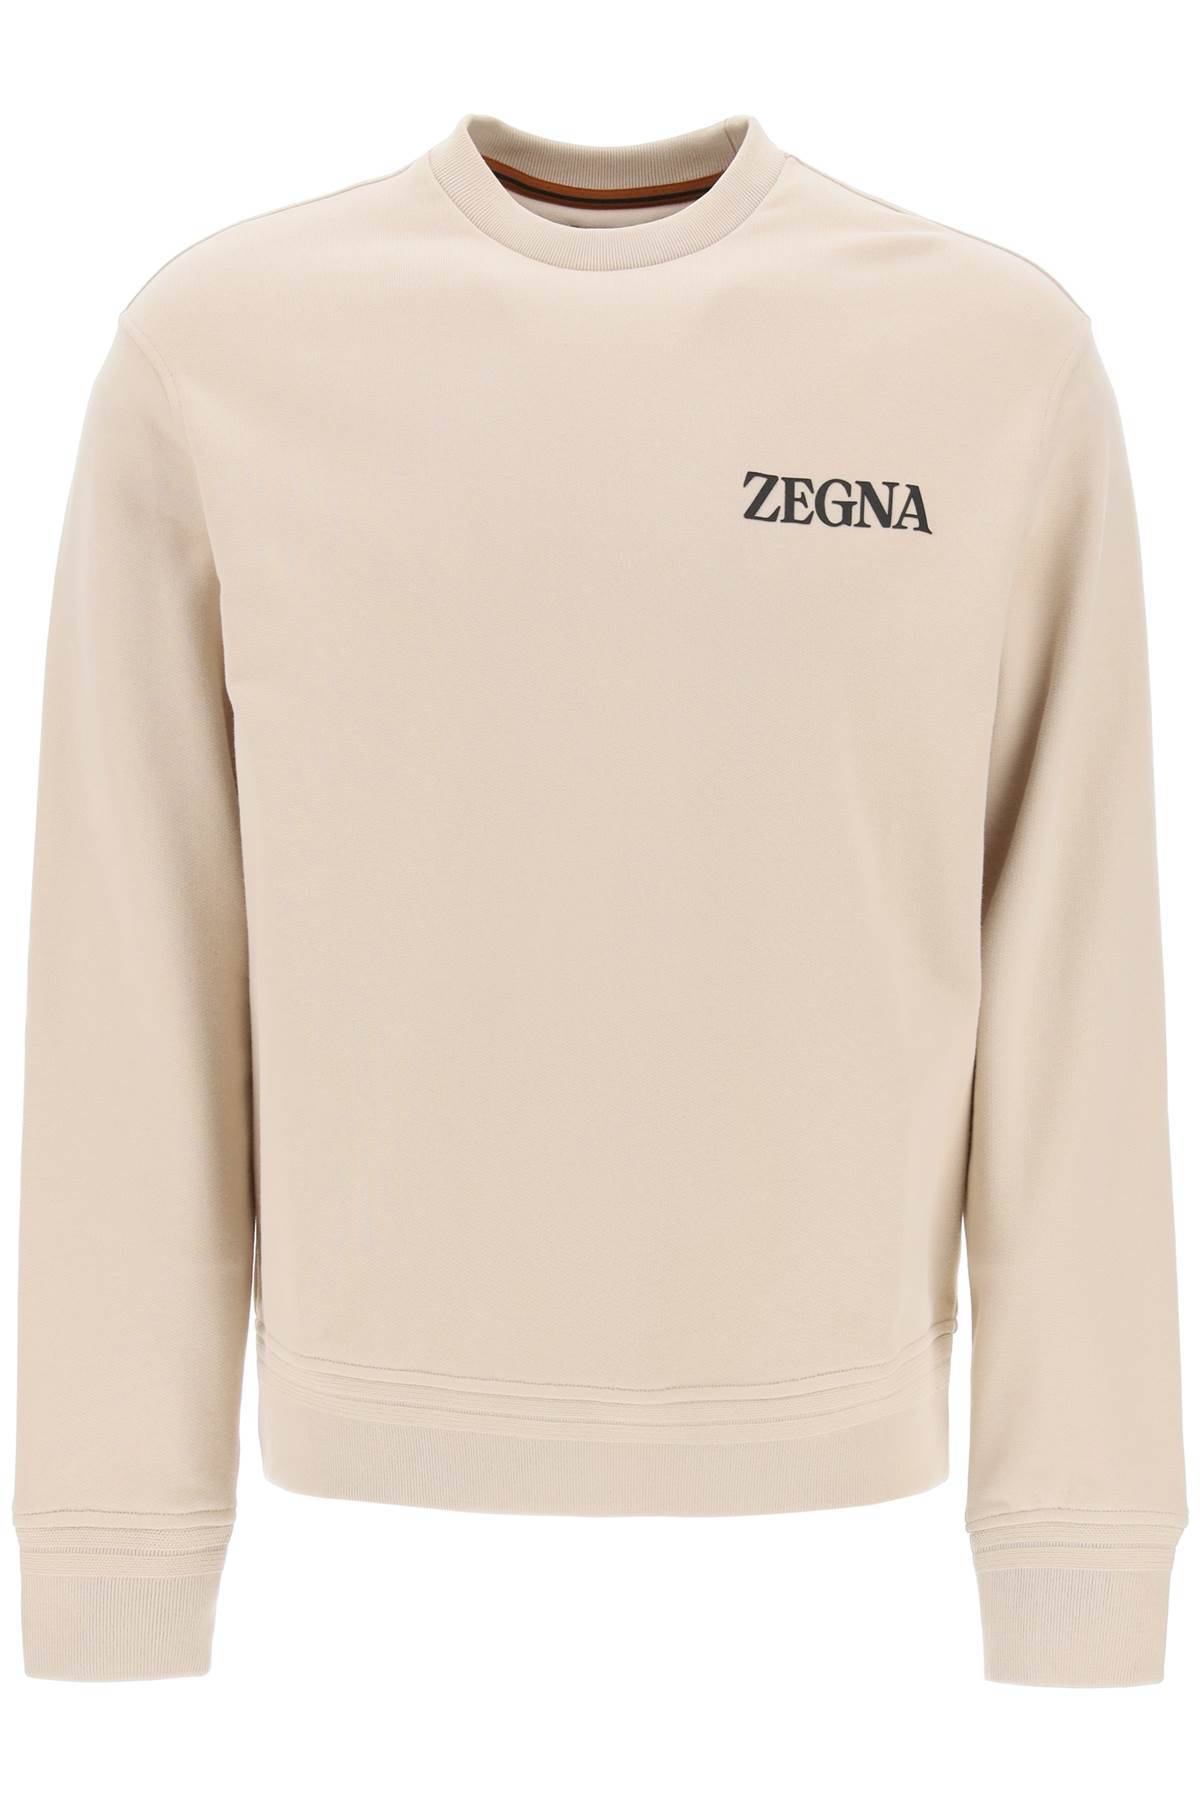 zegna ZEGNA crewneck sweatshirt with rubberized logo